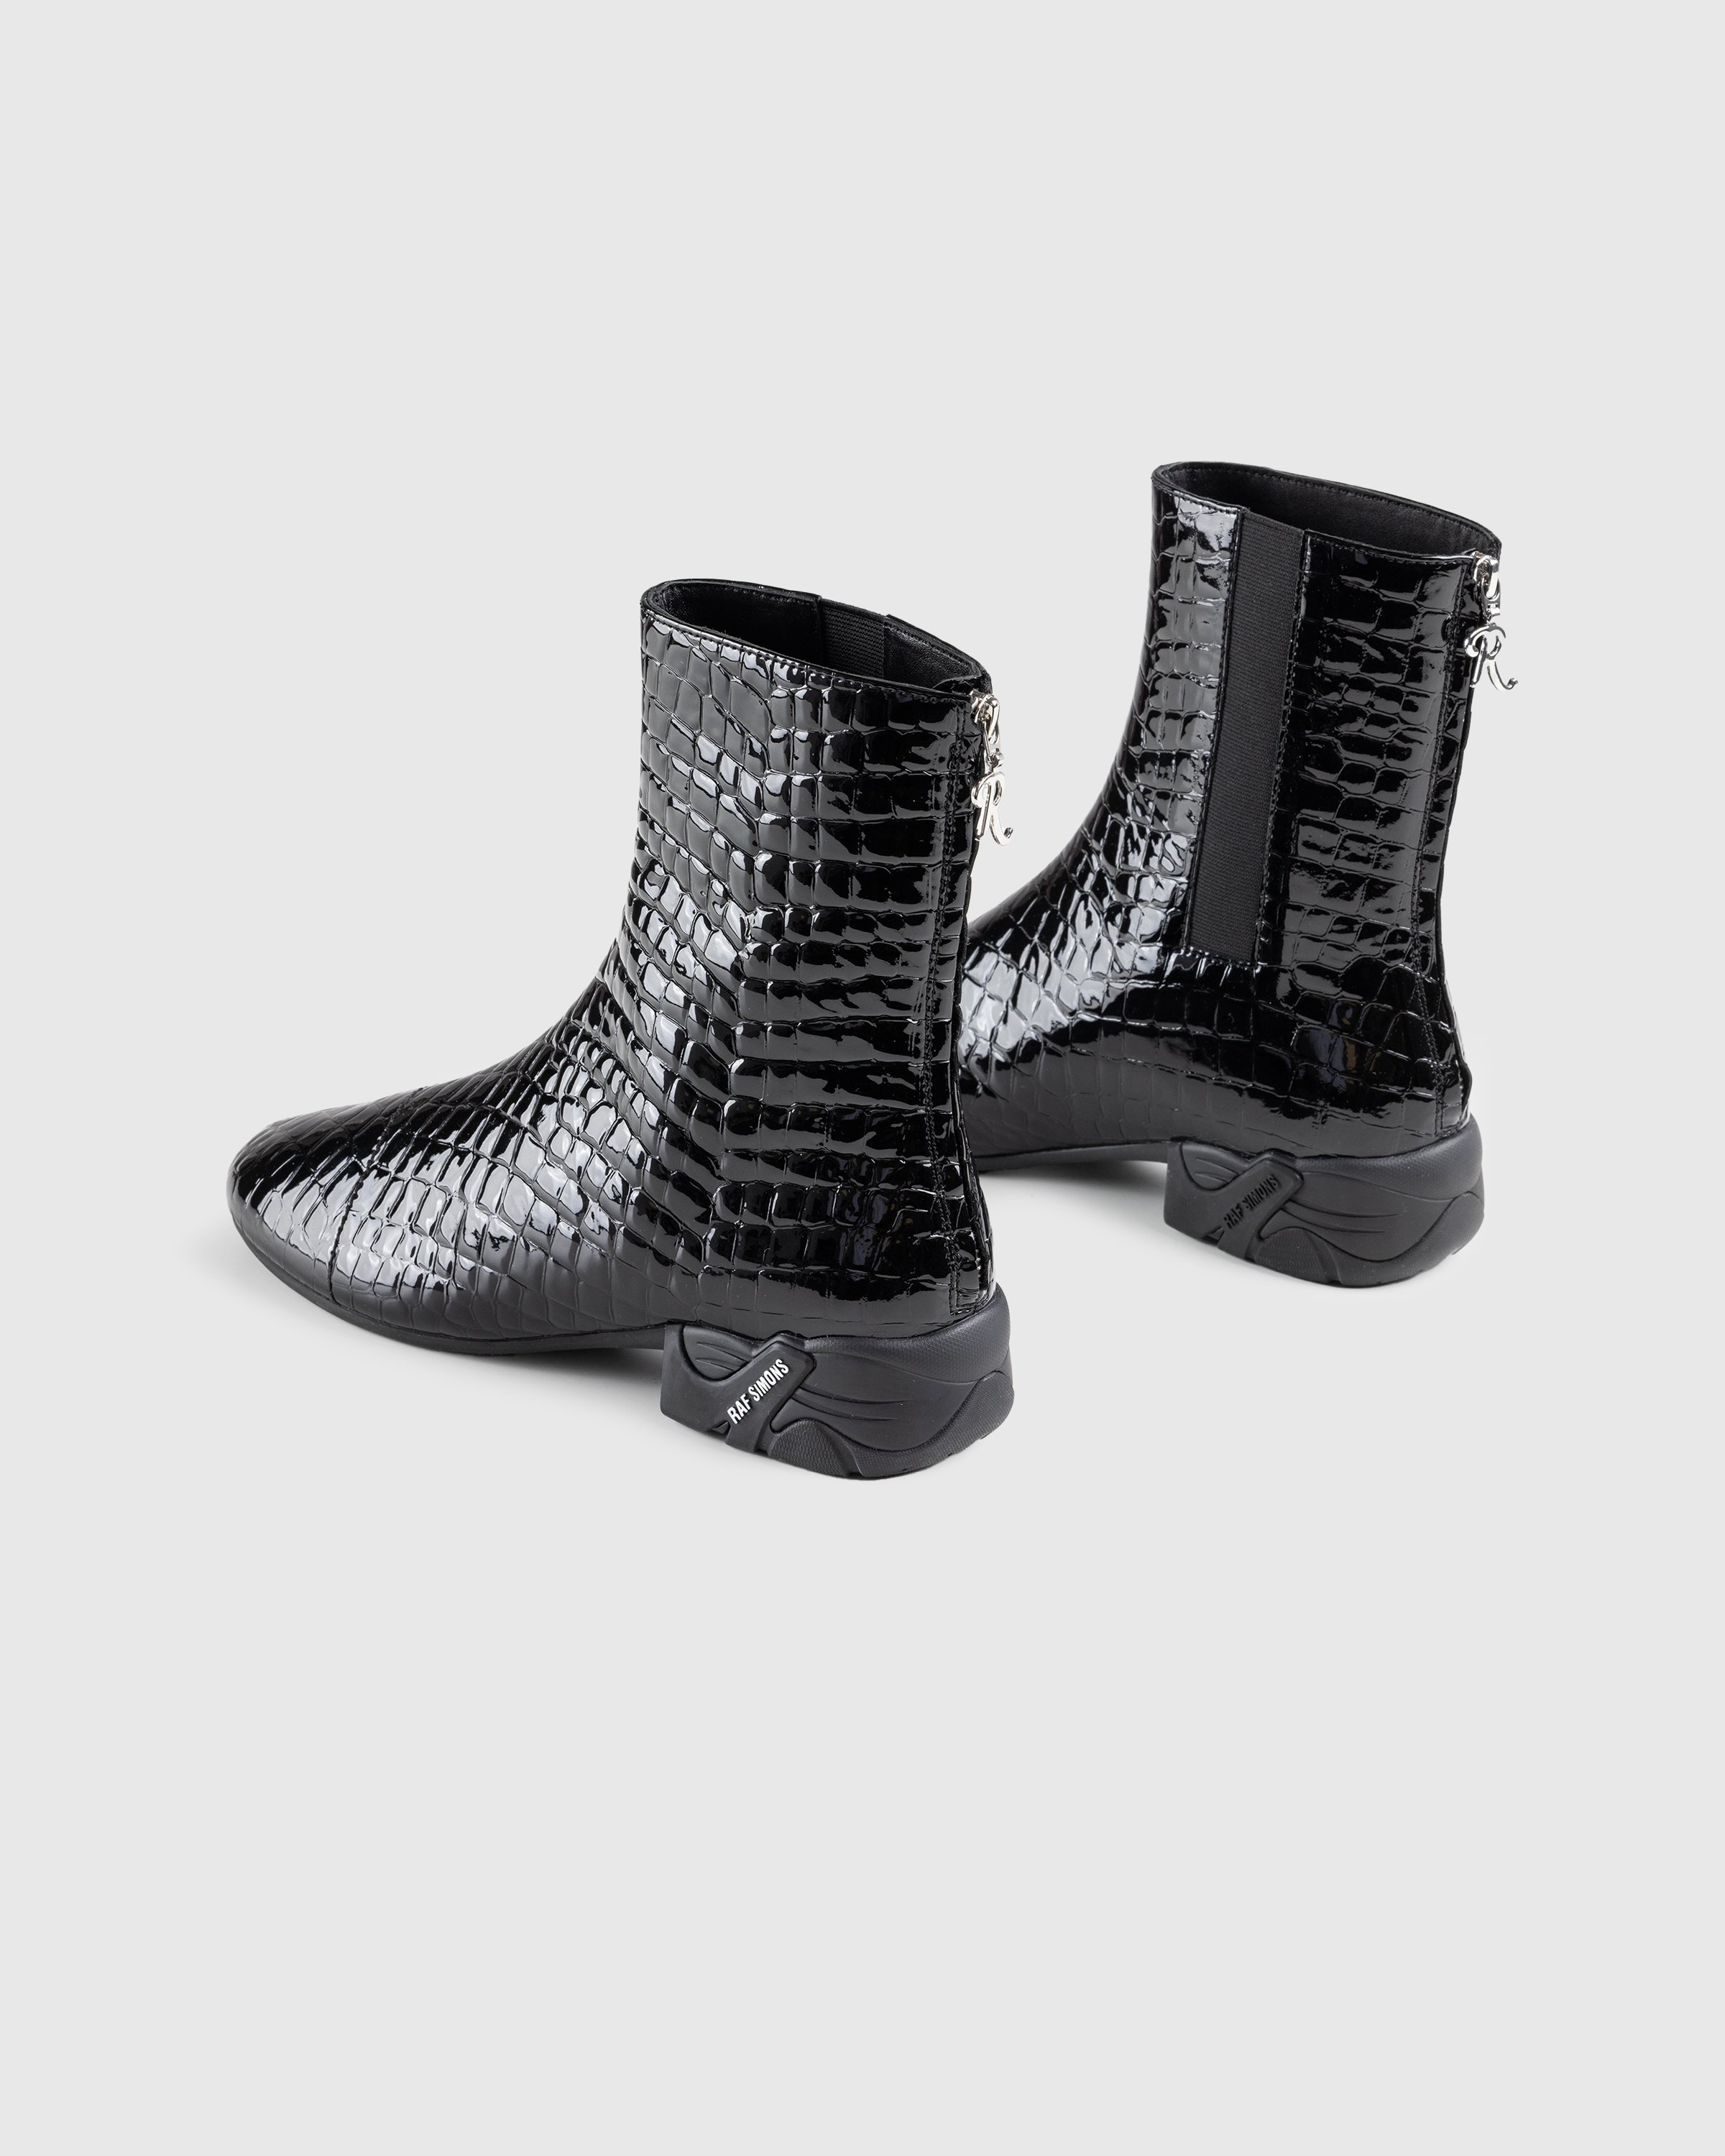 Raf Simons - Solaris High Leather Boot Black Croc - Footwear - Black - Image 4